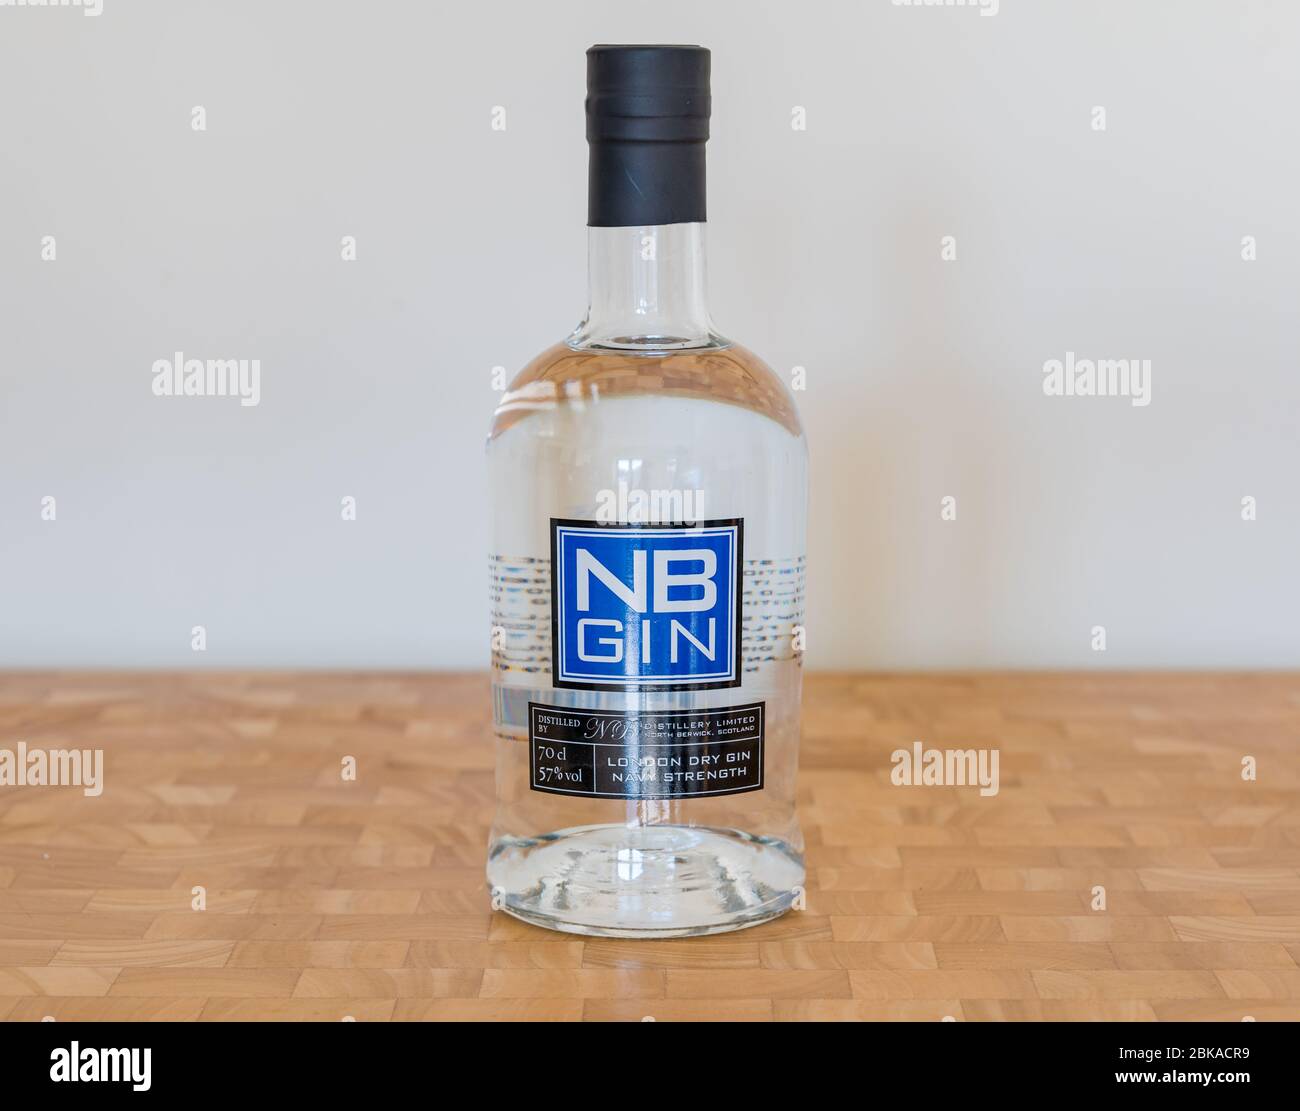 NB gin or North Berwick London dry gin bottle navy strength Stock Photo